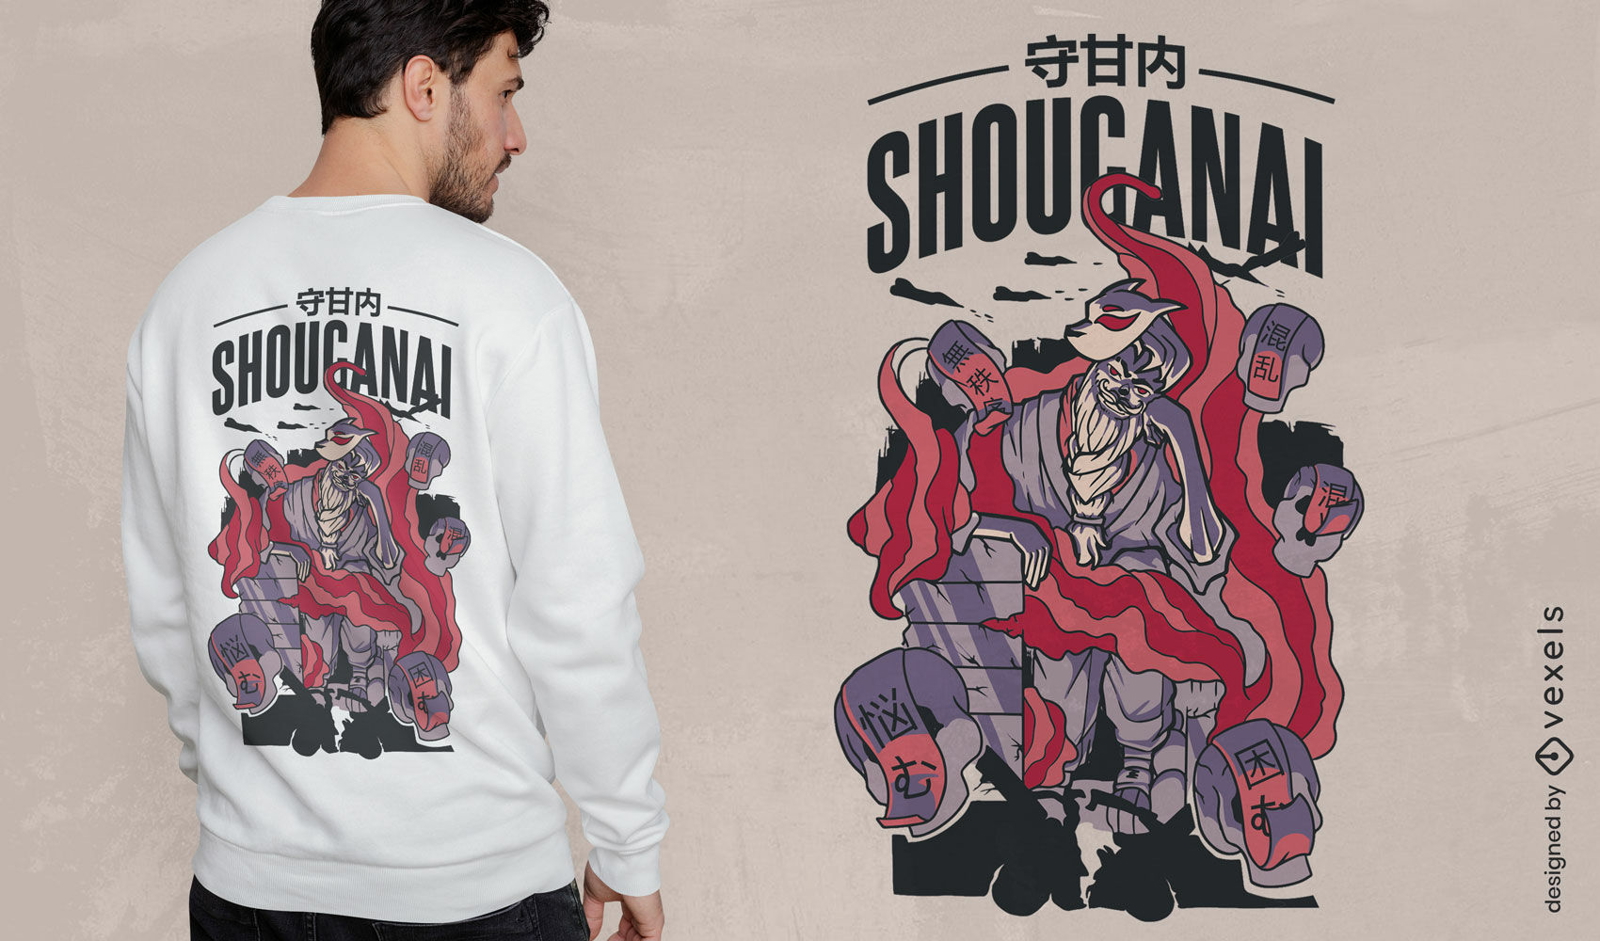 Shouganai Japanese t-shirt design